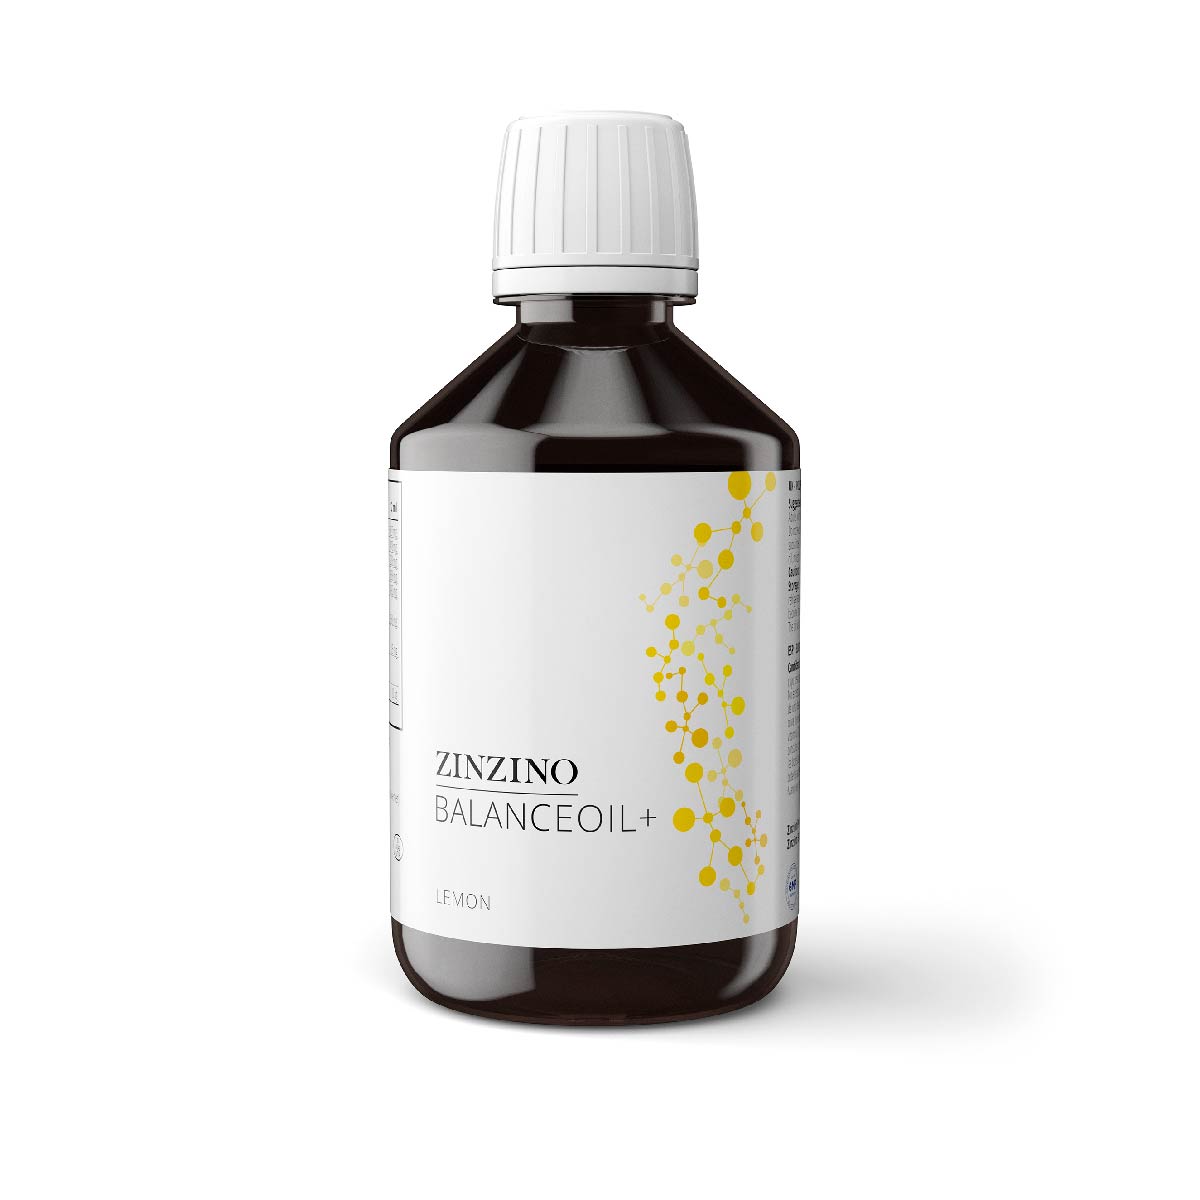 Zinzino - BalanceOil+ (Lemon Flavour)